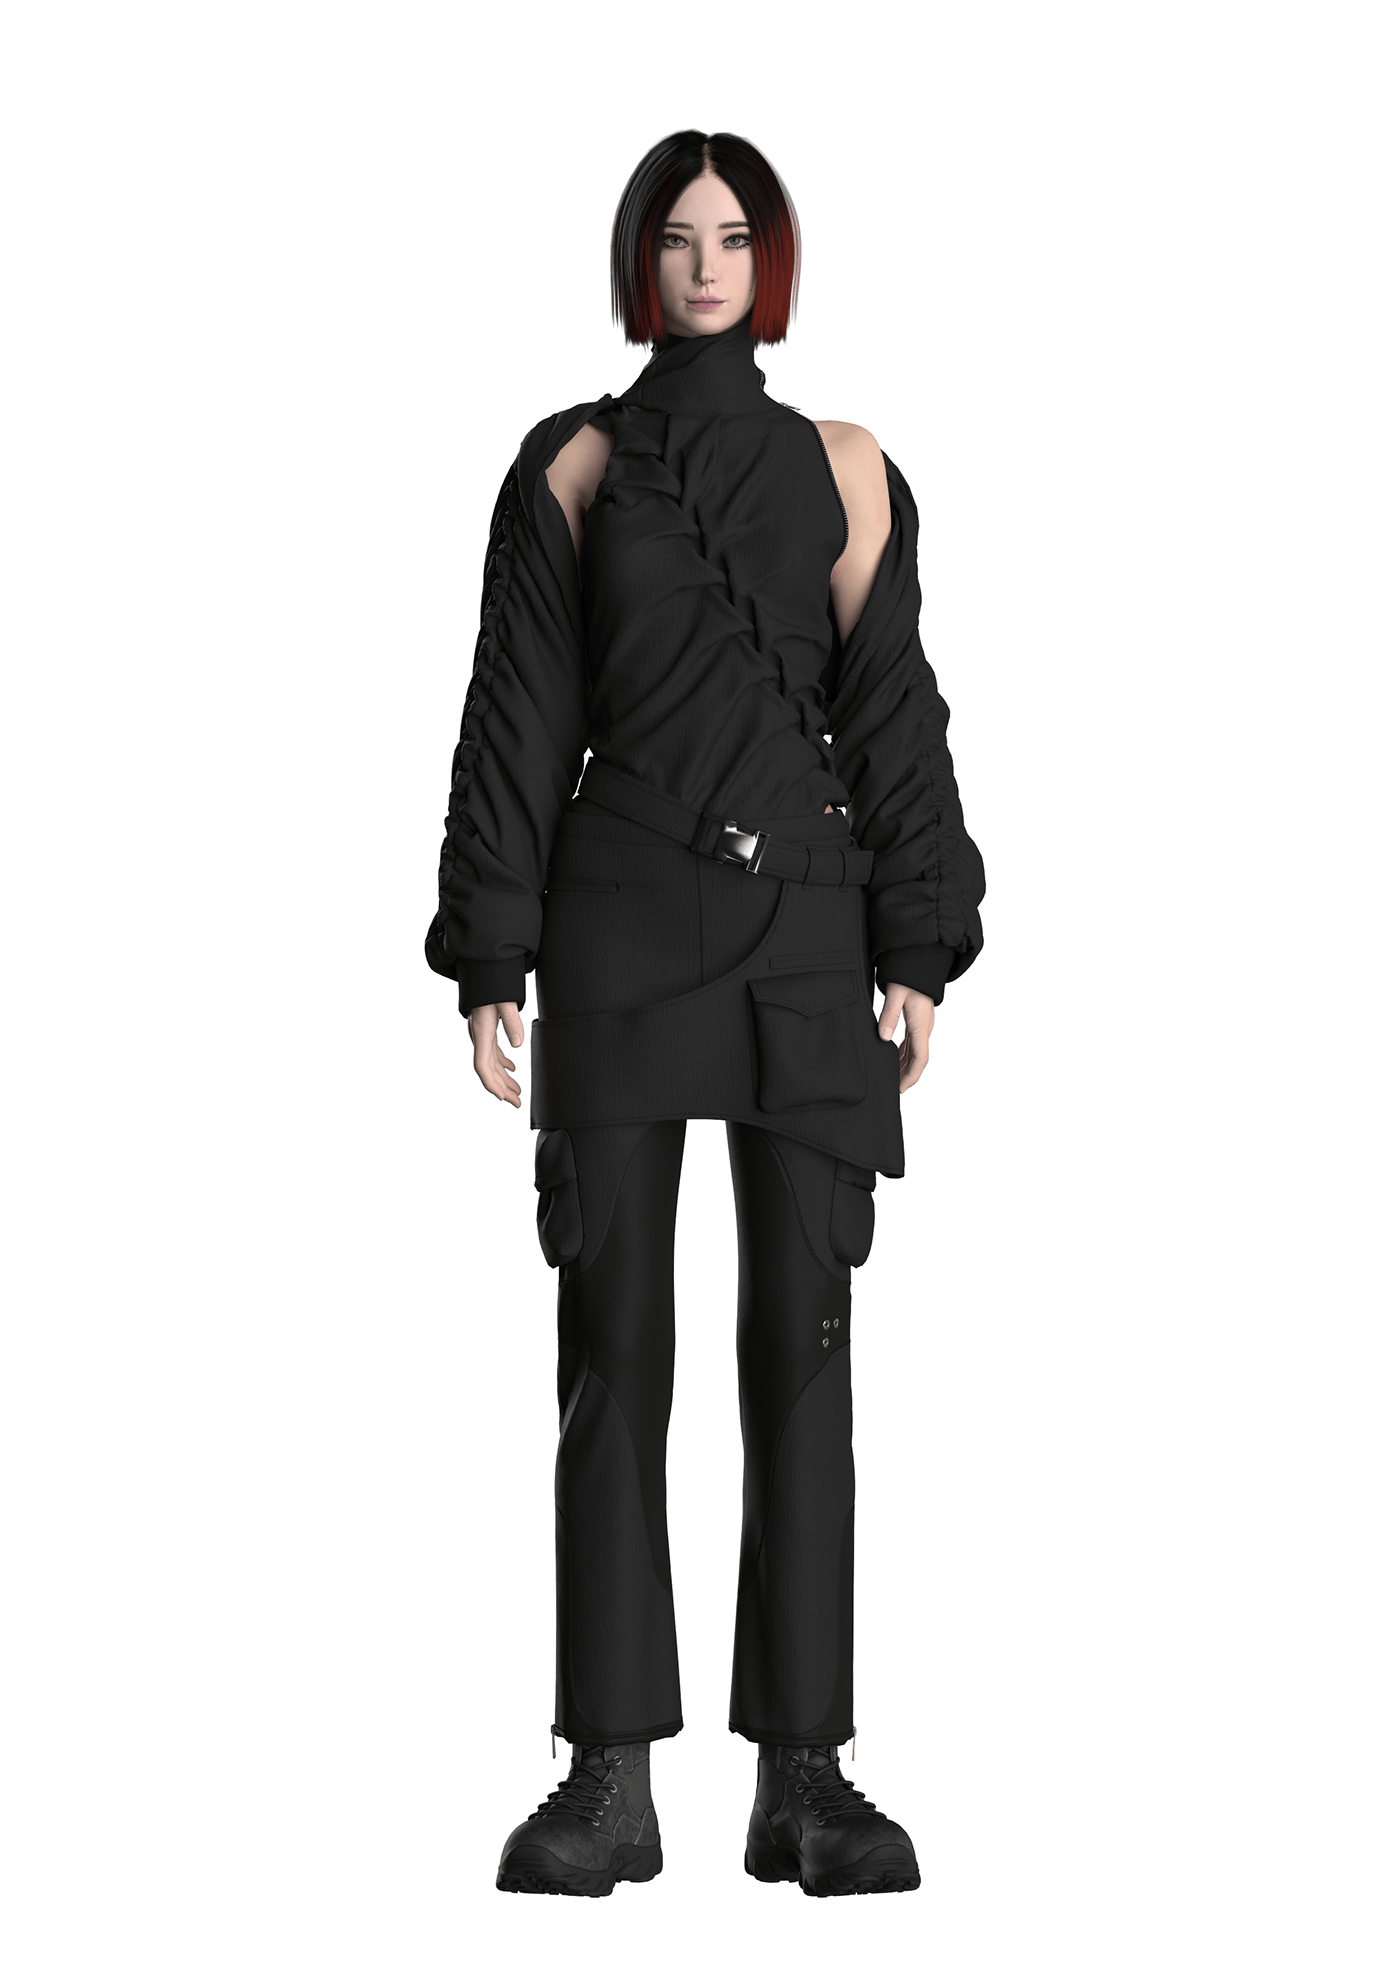 charaterdesign conceptart 3dart 3DDesign Avater fashiondesign 3dfashion digitalfashion makeup Noai